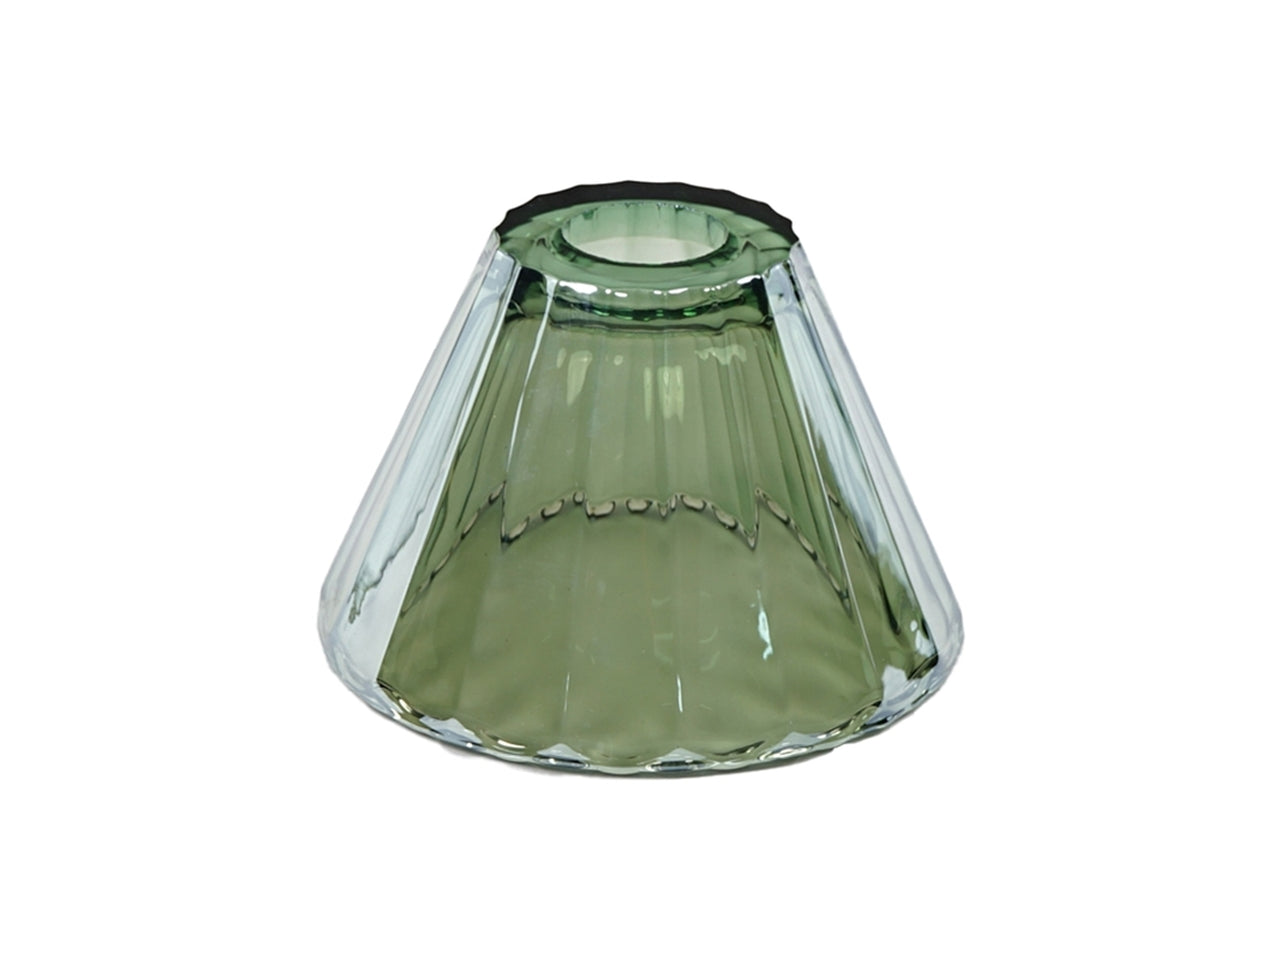 Paralume in vetro verde forma campana stile moderno d.13x9 cm - Plàthea